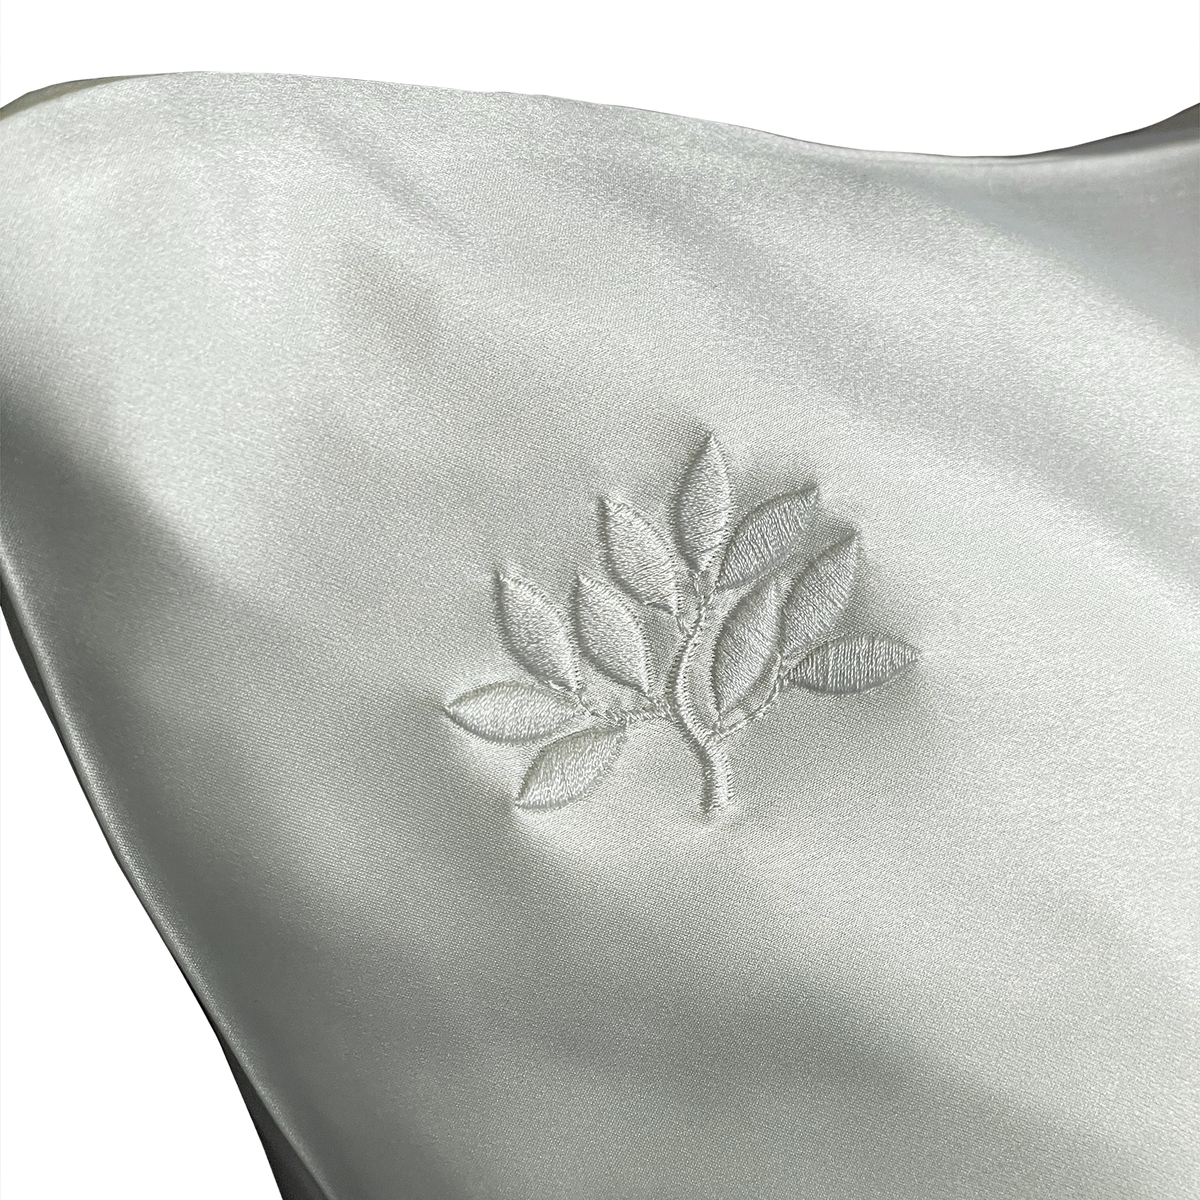 30 Momme Silk Pillowcase - Ivory